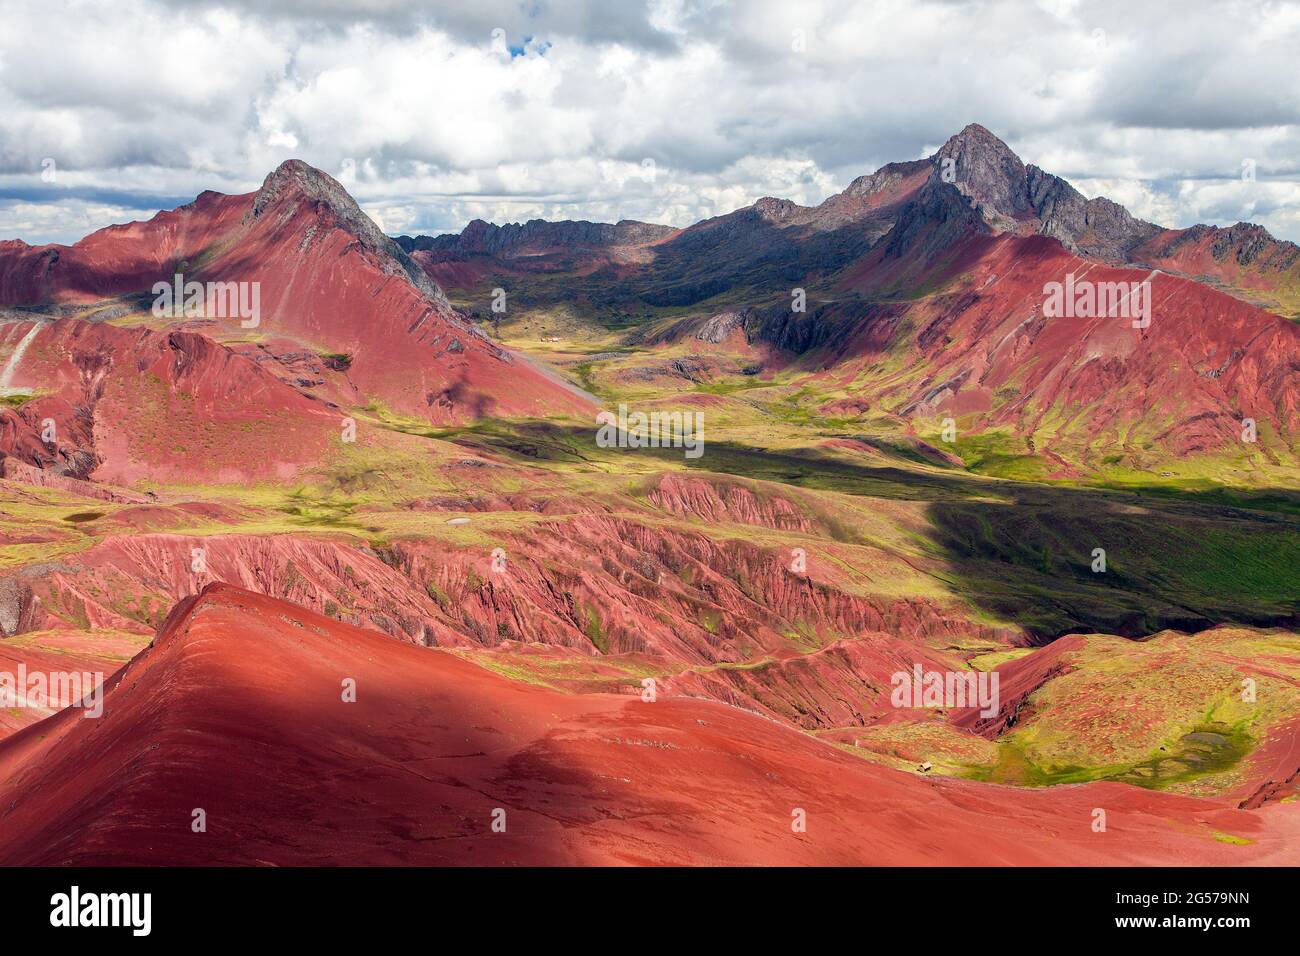 Rainbow Mountains oder Vinicunca Montana de Siete Colores, Cuzco Region in Peru, peruanische Anden Stockfoto